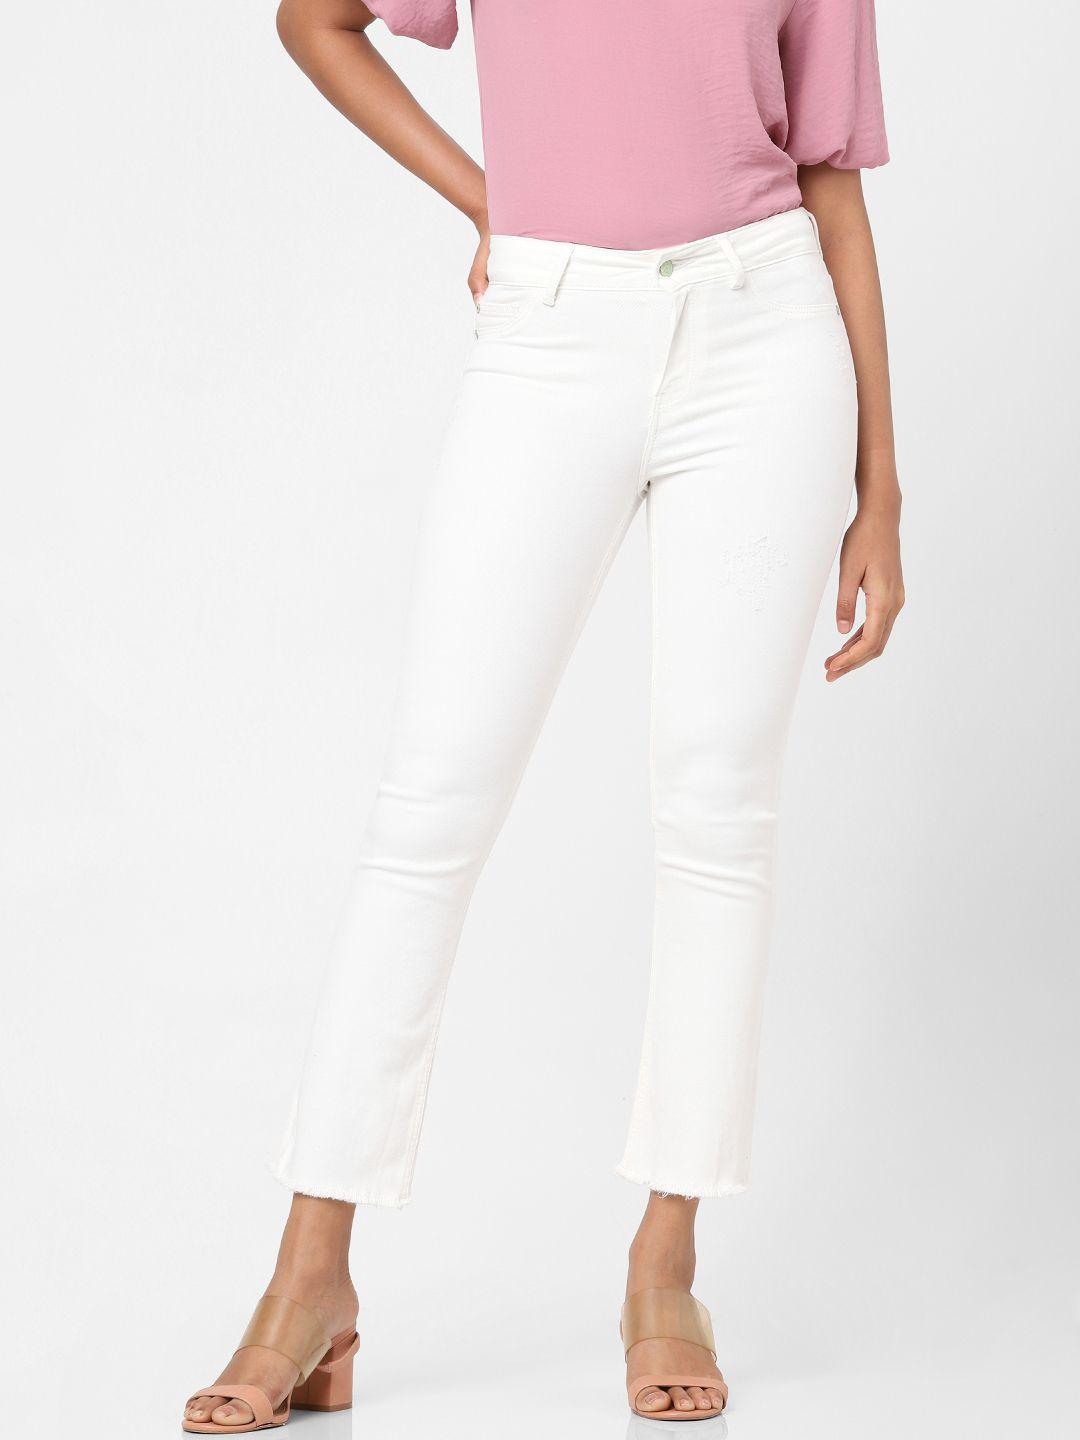 vero moda women white flared mid-rise stretchable jeans